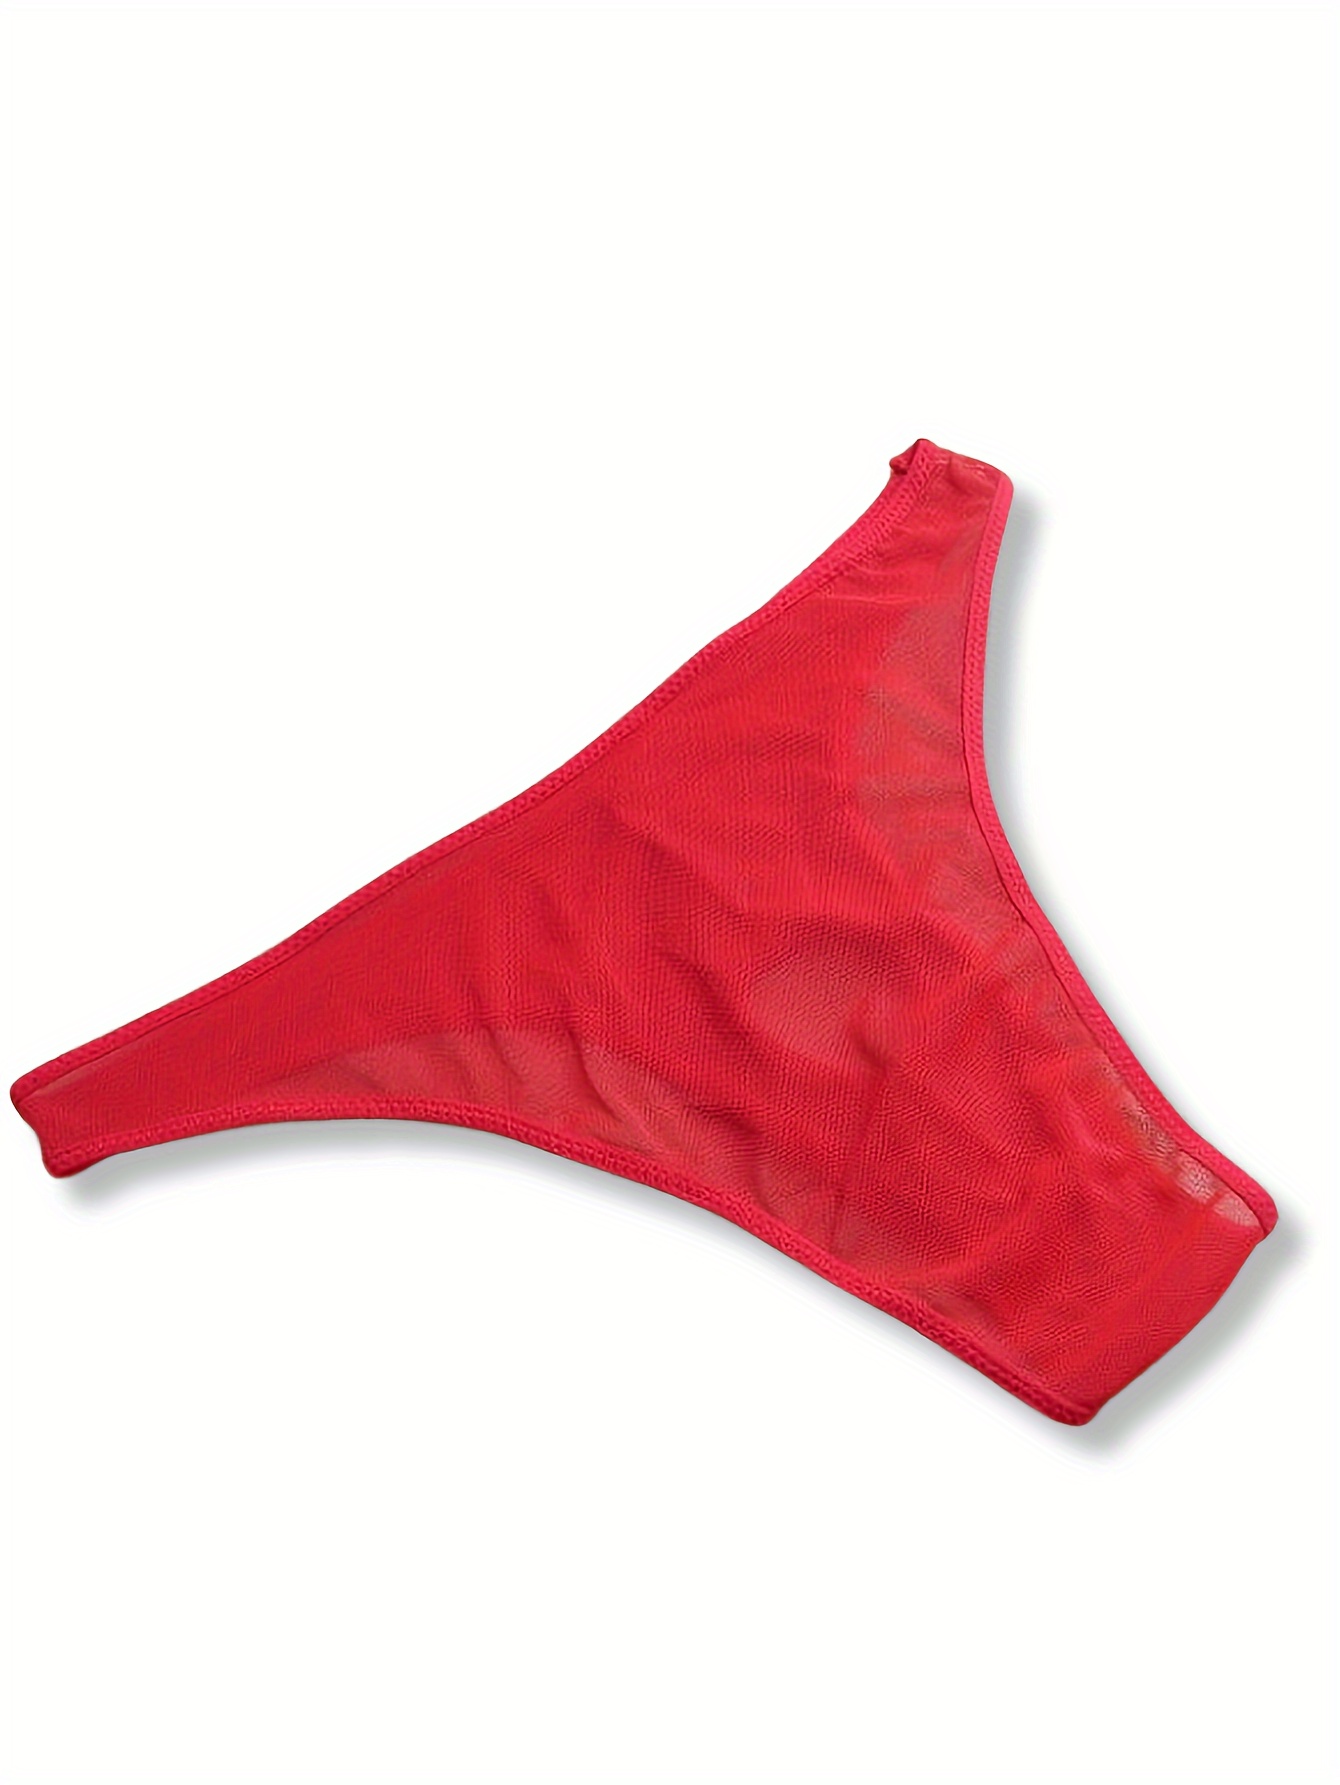 Shop the Rave Mesh Sheer Fishnet Men's Thong Underwear - Stylish